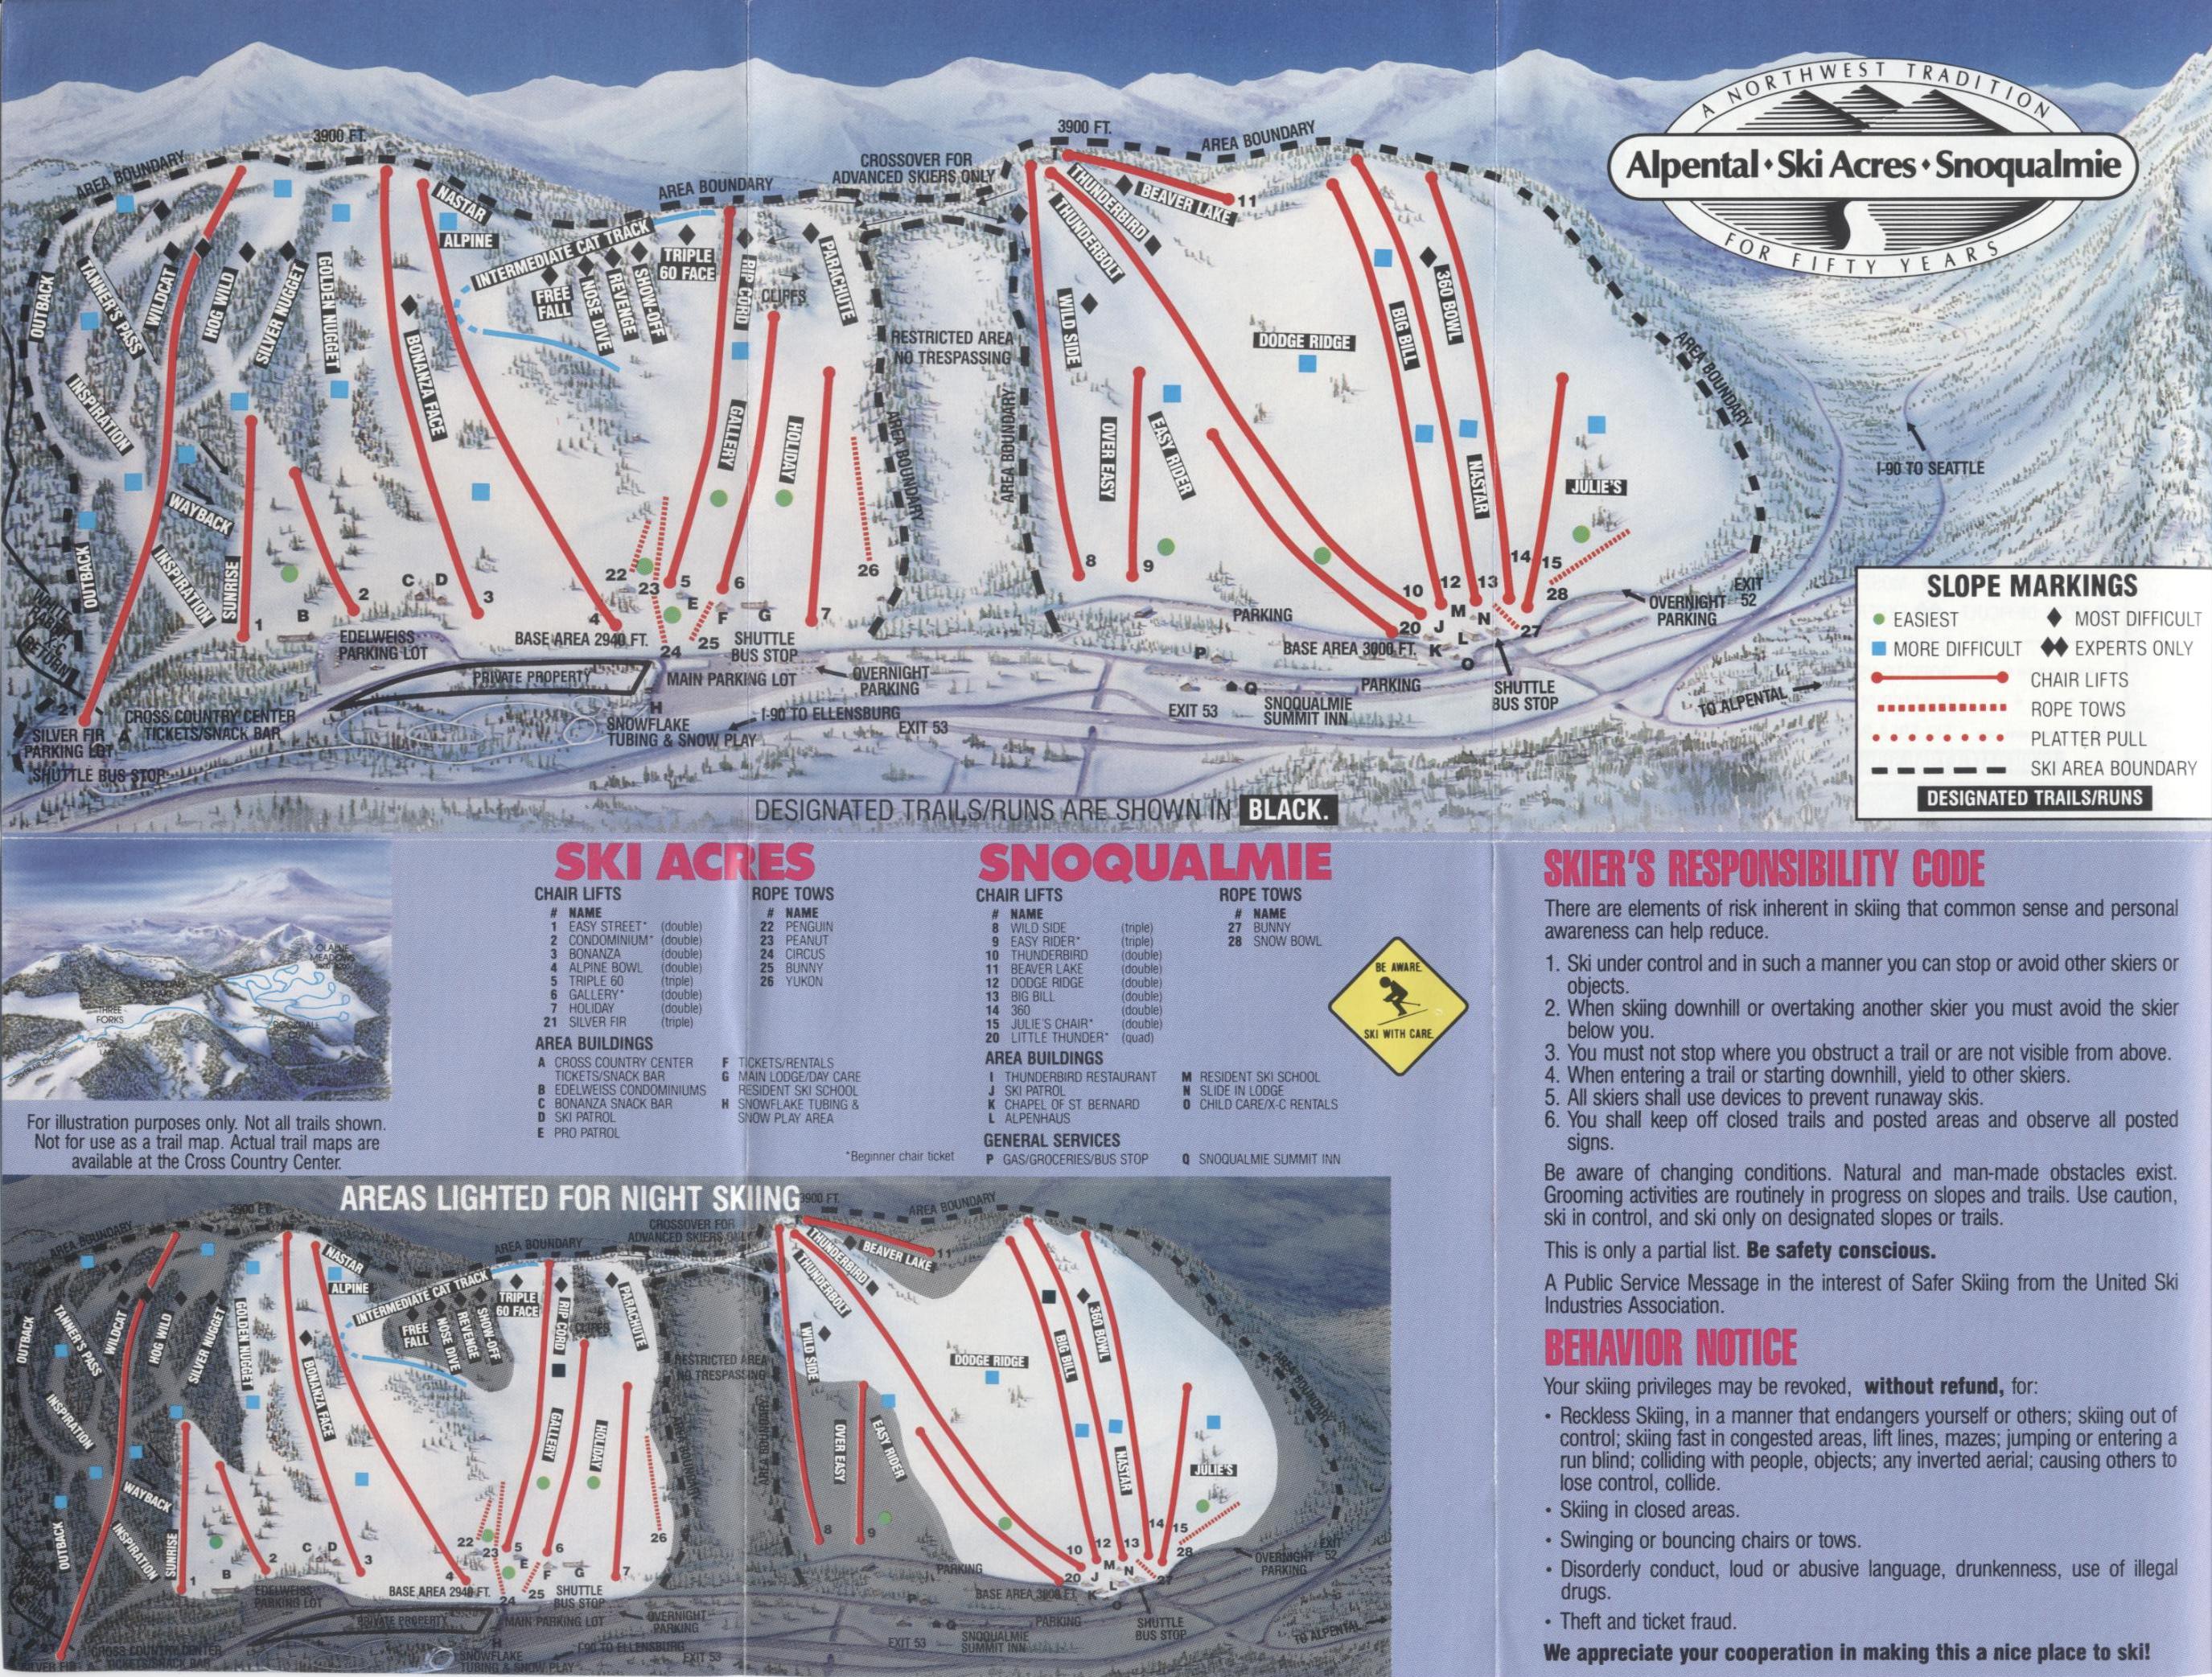 Ski Acres and Snoqualmie Summit